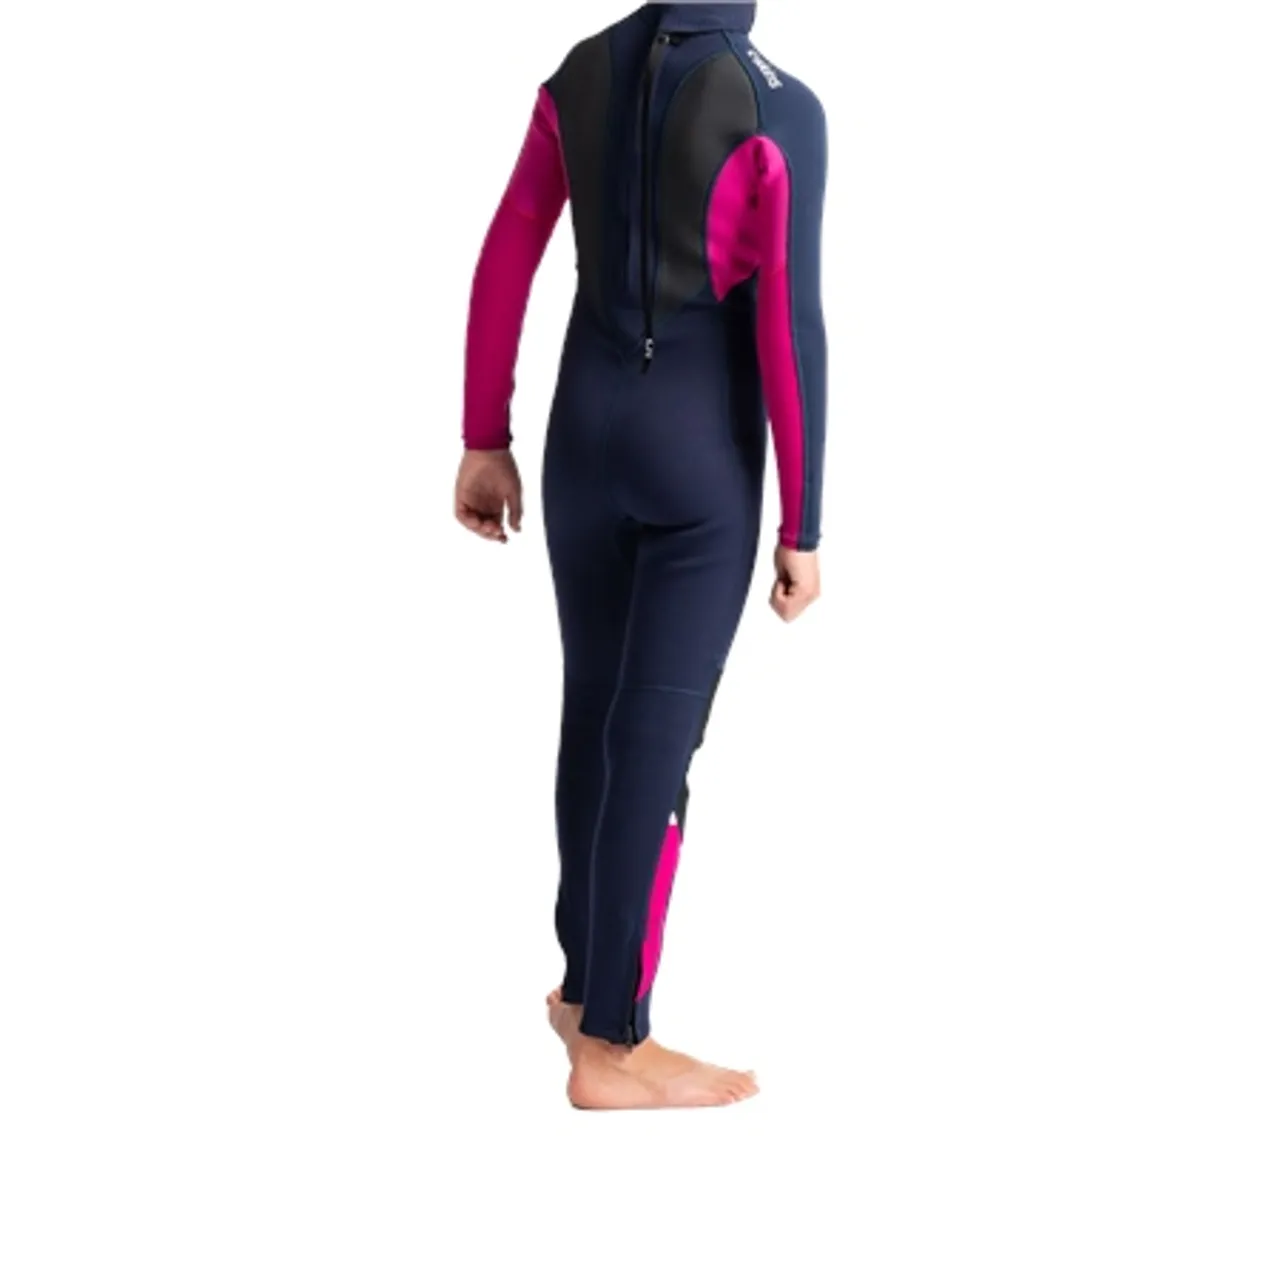 C-Skins Girls Element 3/2mm Back Zip Wetsuit (2022) - Slate Navy, Magenta & Multi